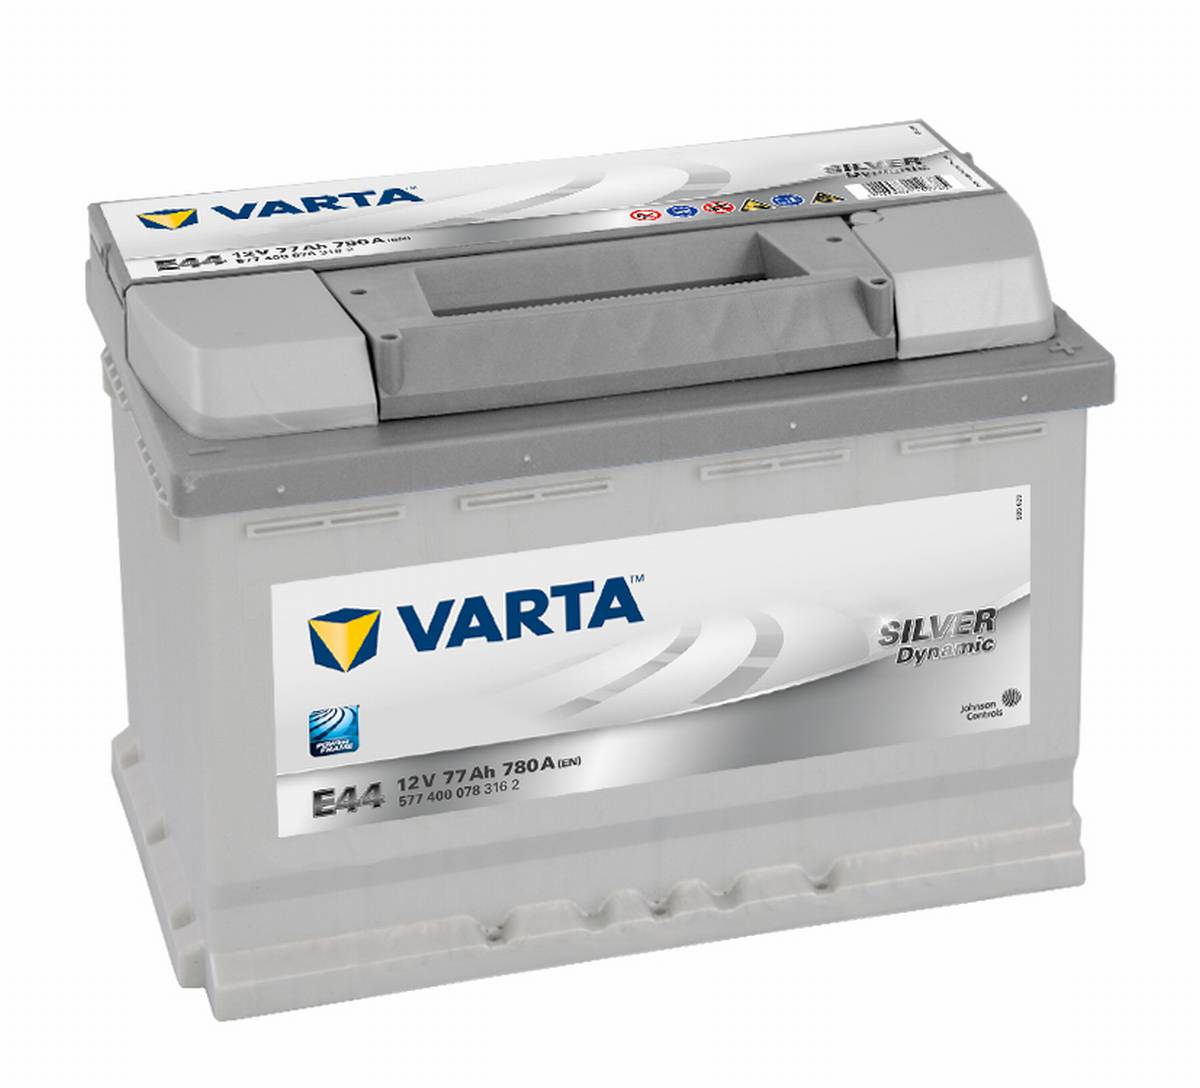 VARTA E44 Silver Dynamic 12V 77Ah 780A Batteria auto 577 400 078